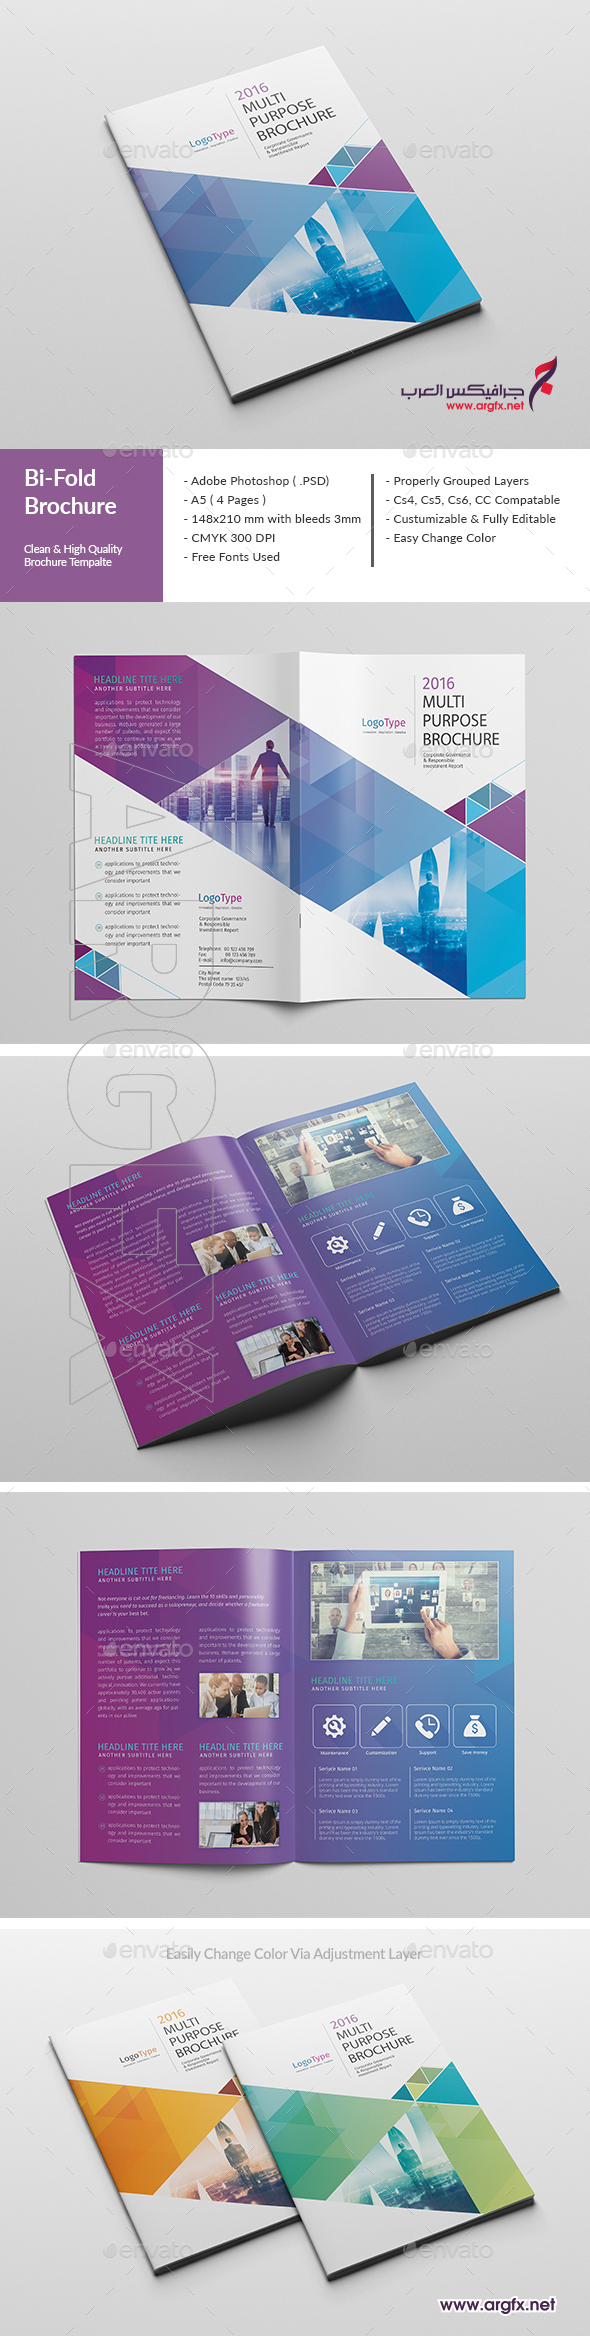 GR - Corporate Bi-Fold Brochure 04 15018098